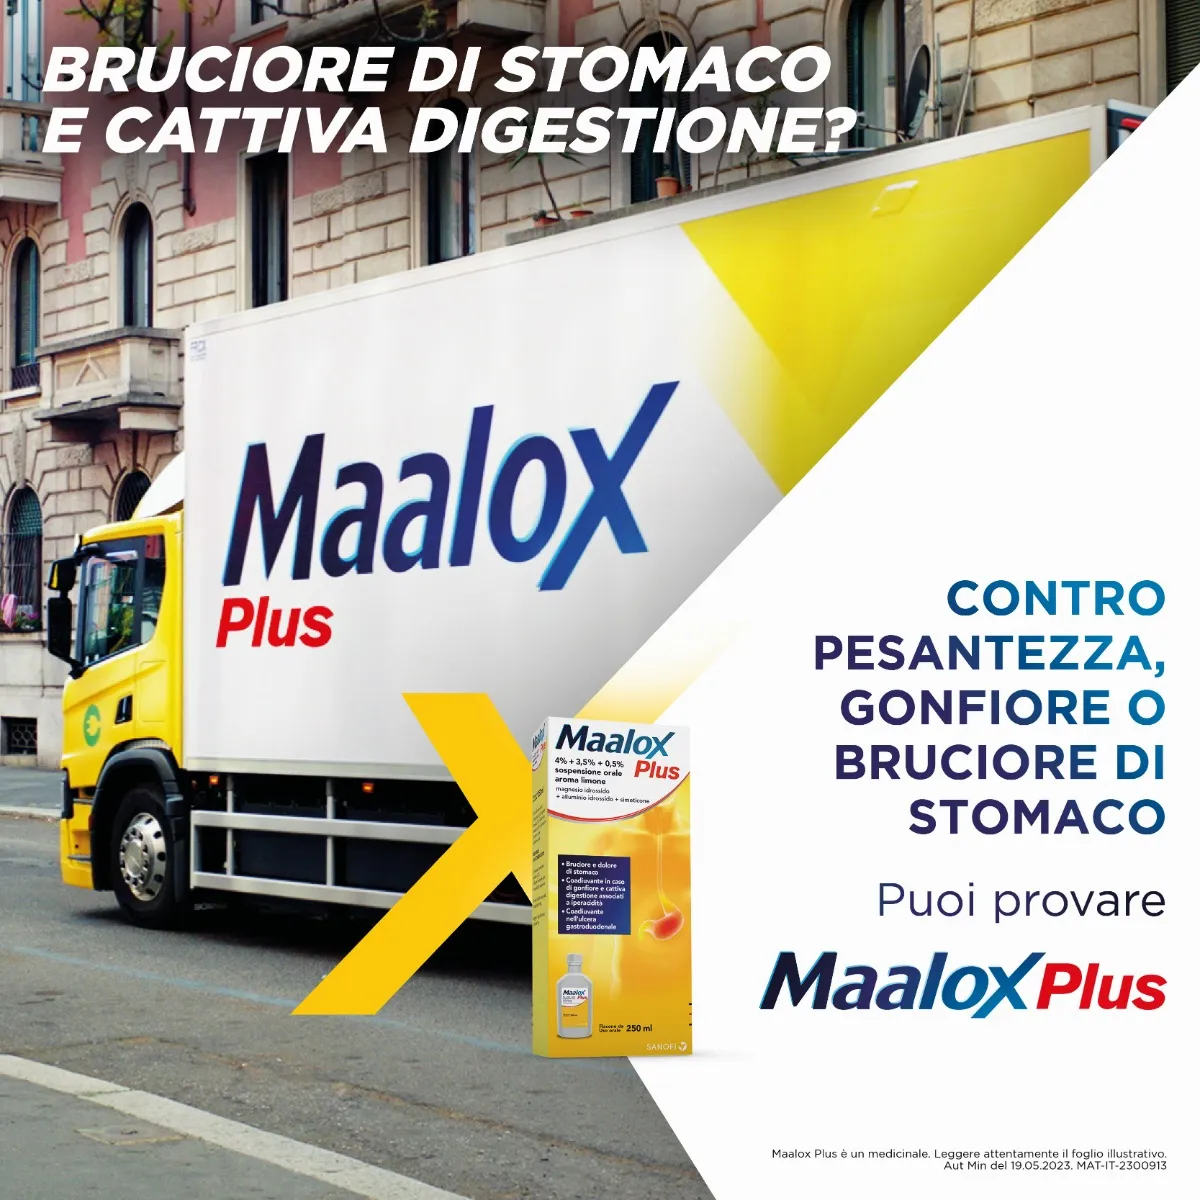 Maalox Plus Sospensione Orale Gusto Limone 250 ml Antiacido